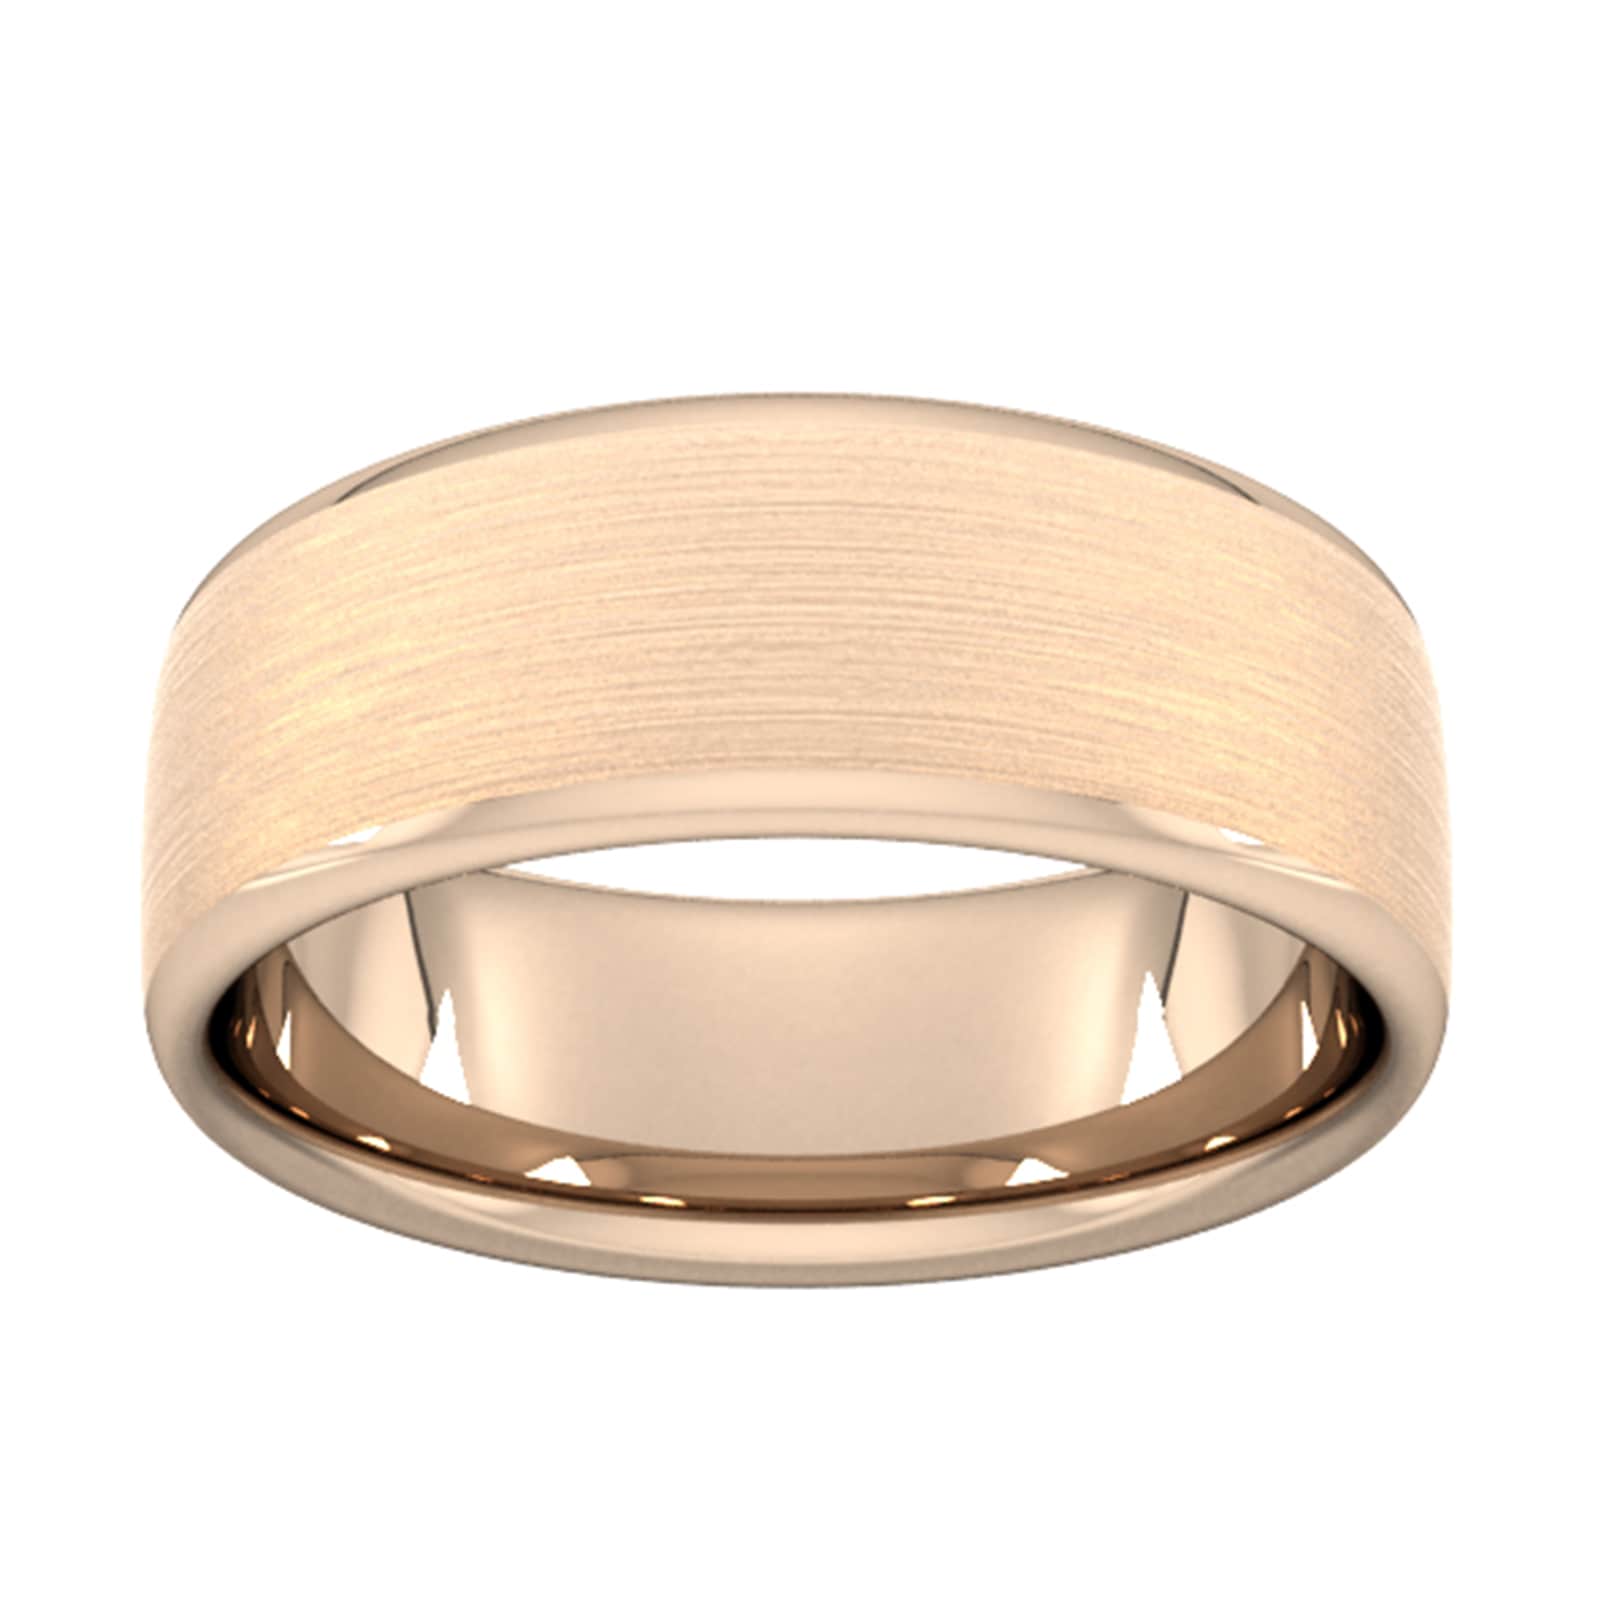 8mm Slight Court Standard Matt Finished Wedding Ring In 18 Carat Rose Gold - Ring Size T